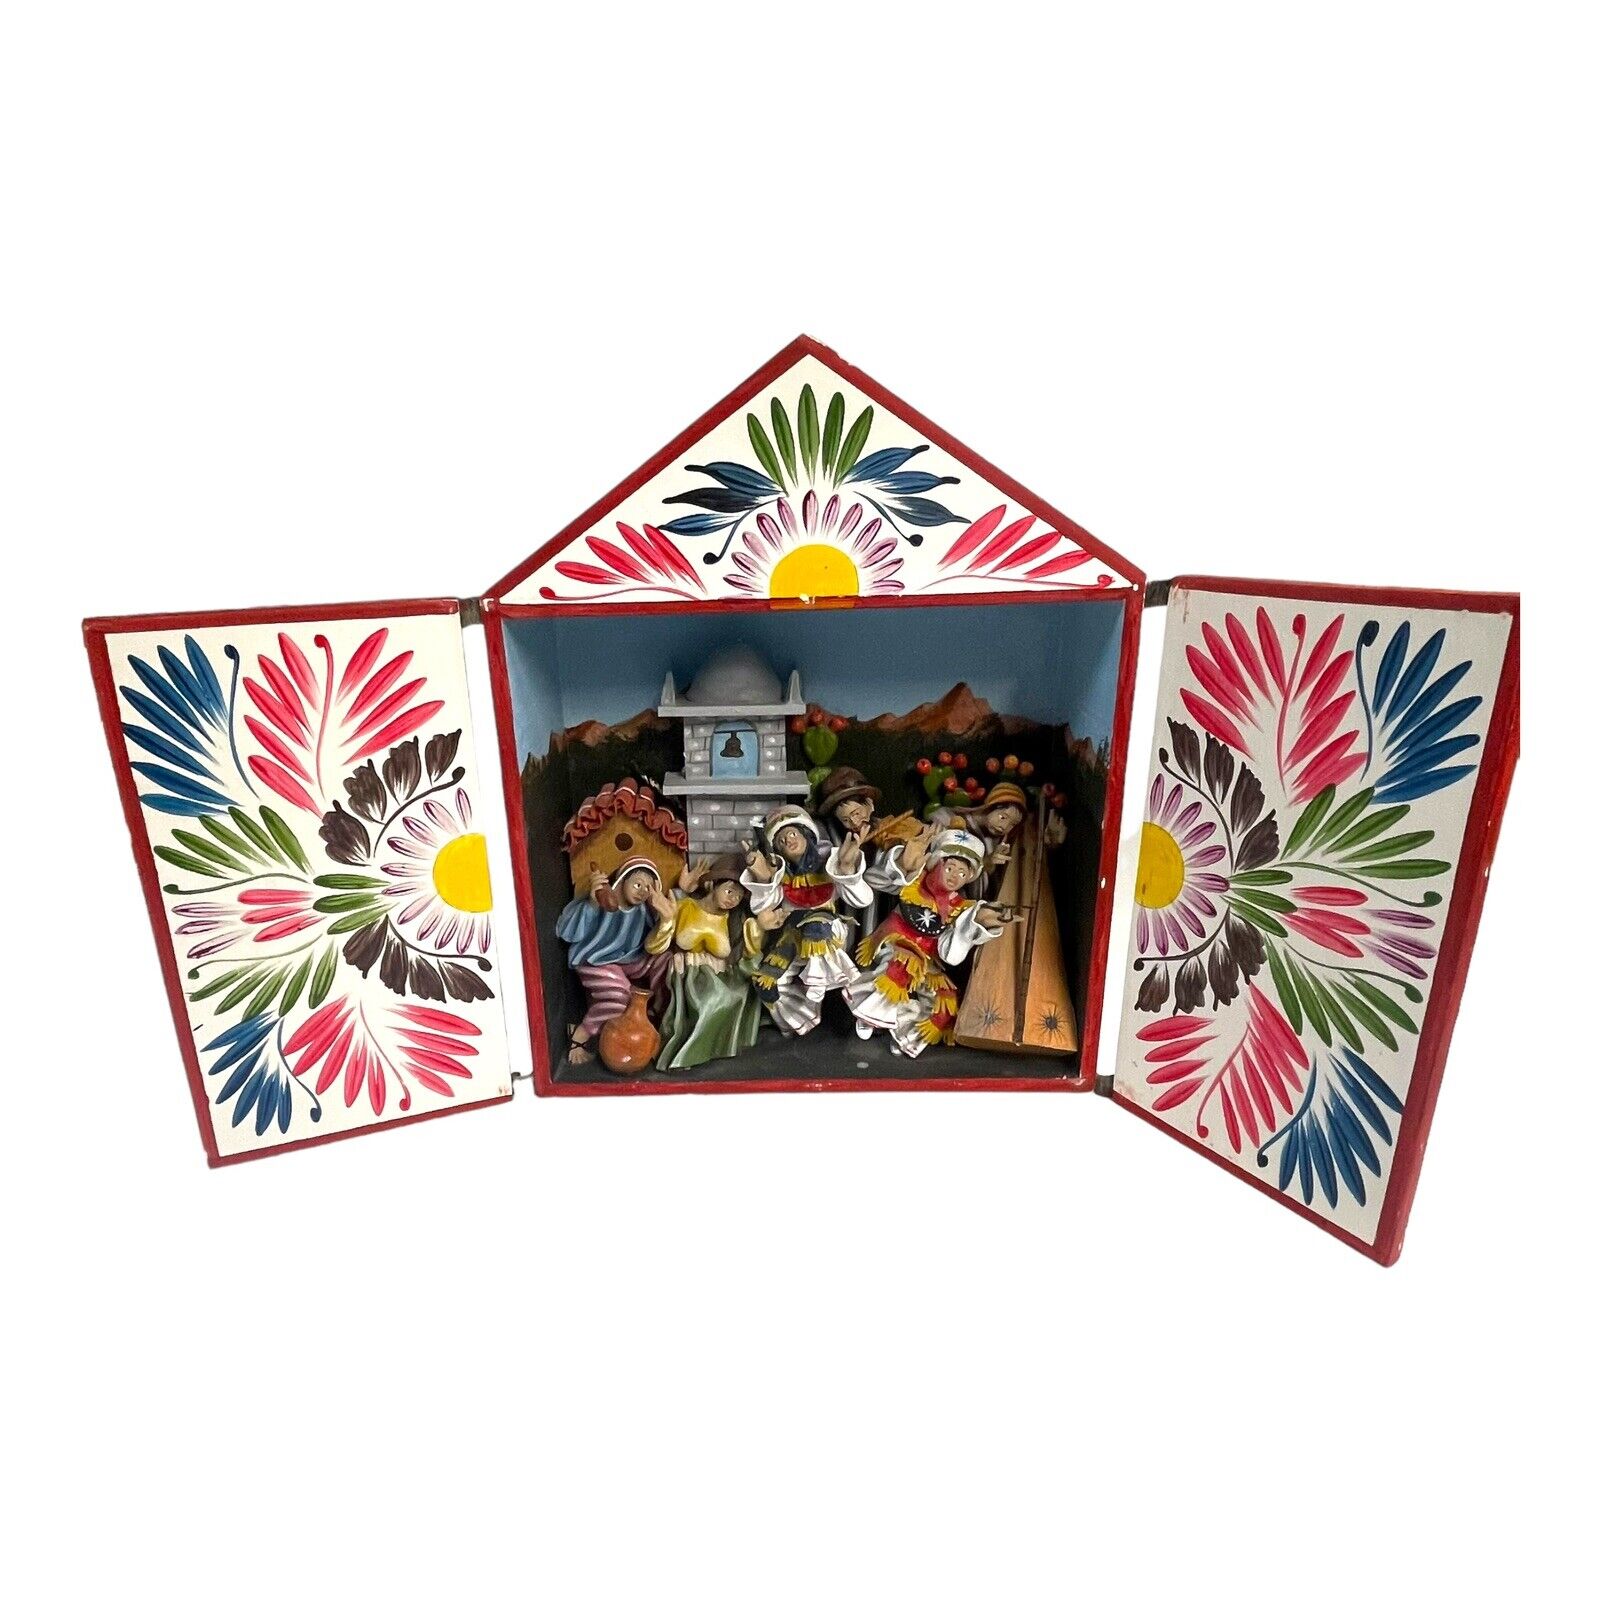 Retablo Peruvian Folk Art Shadow Box Diorama Tannery shop scene Artist Signed VT